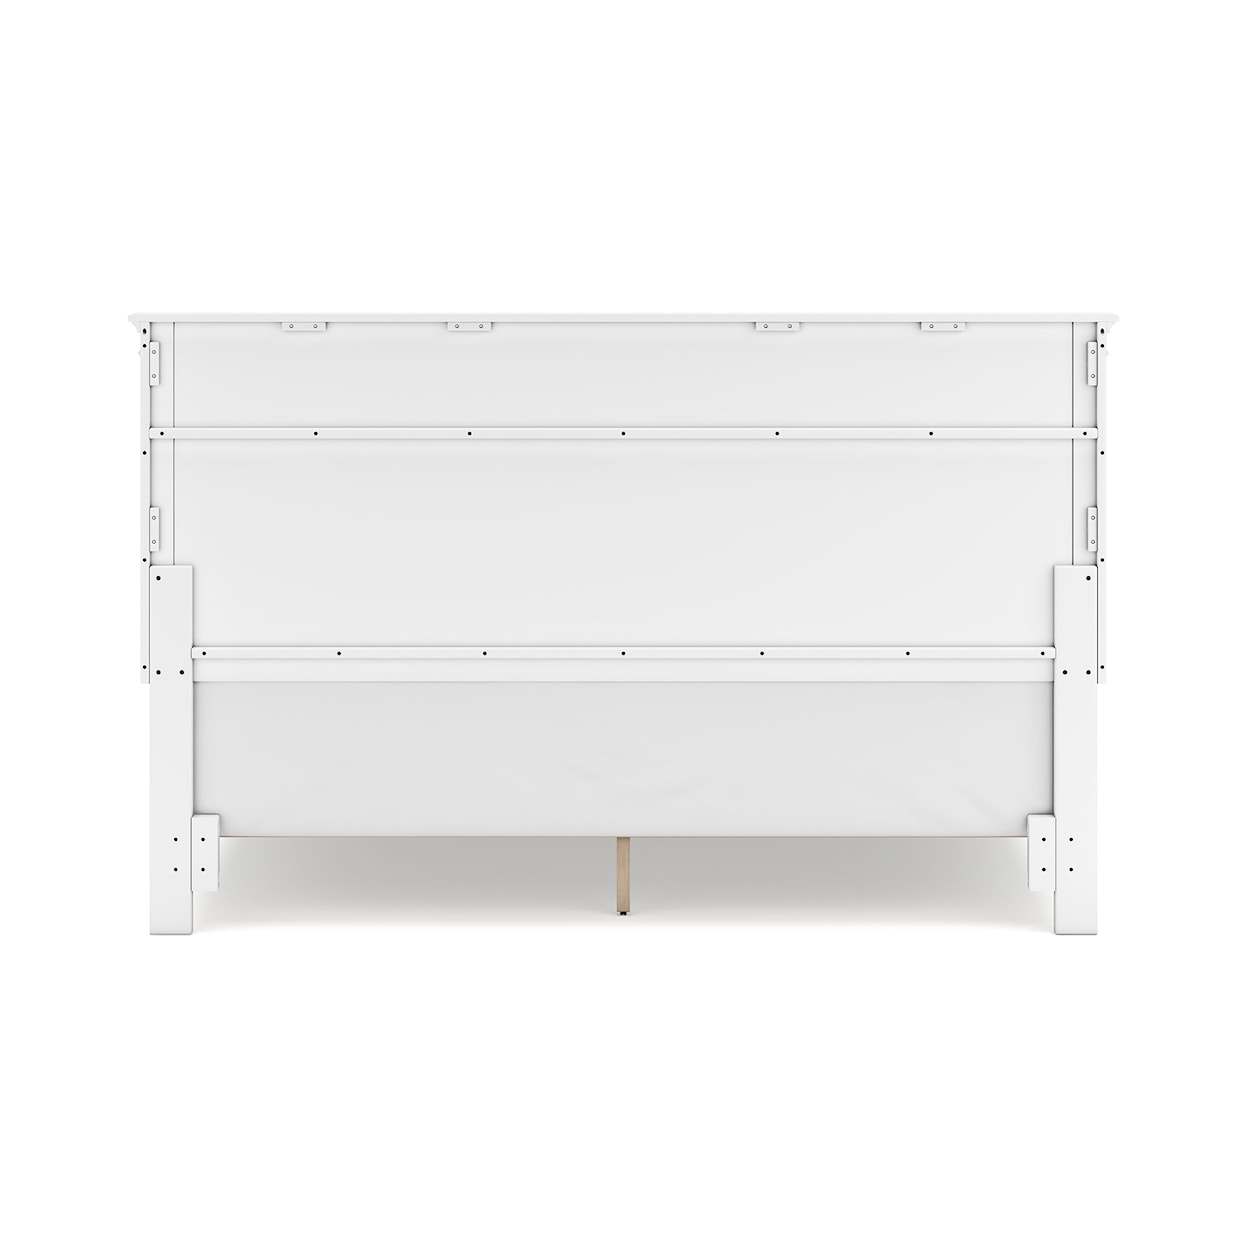 Benchcraft Fortman King Panel Bed